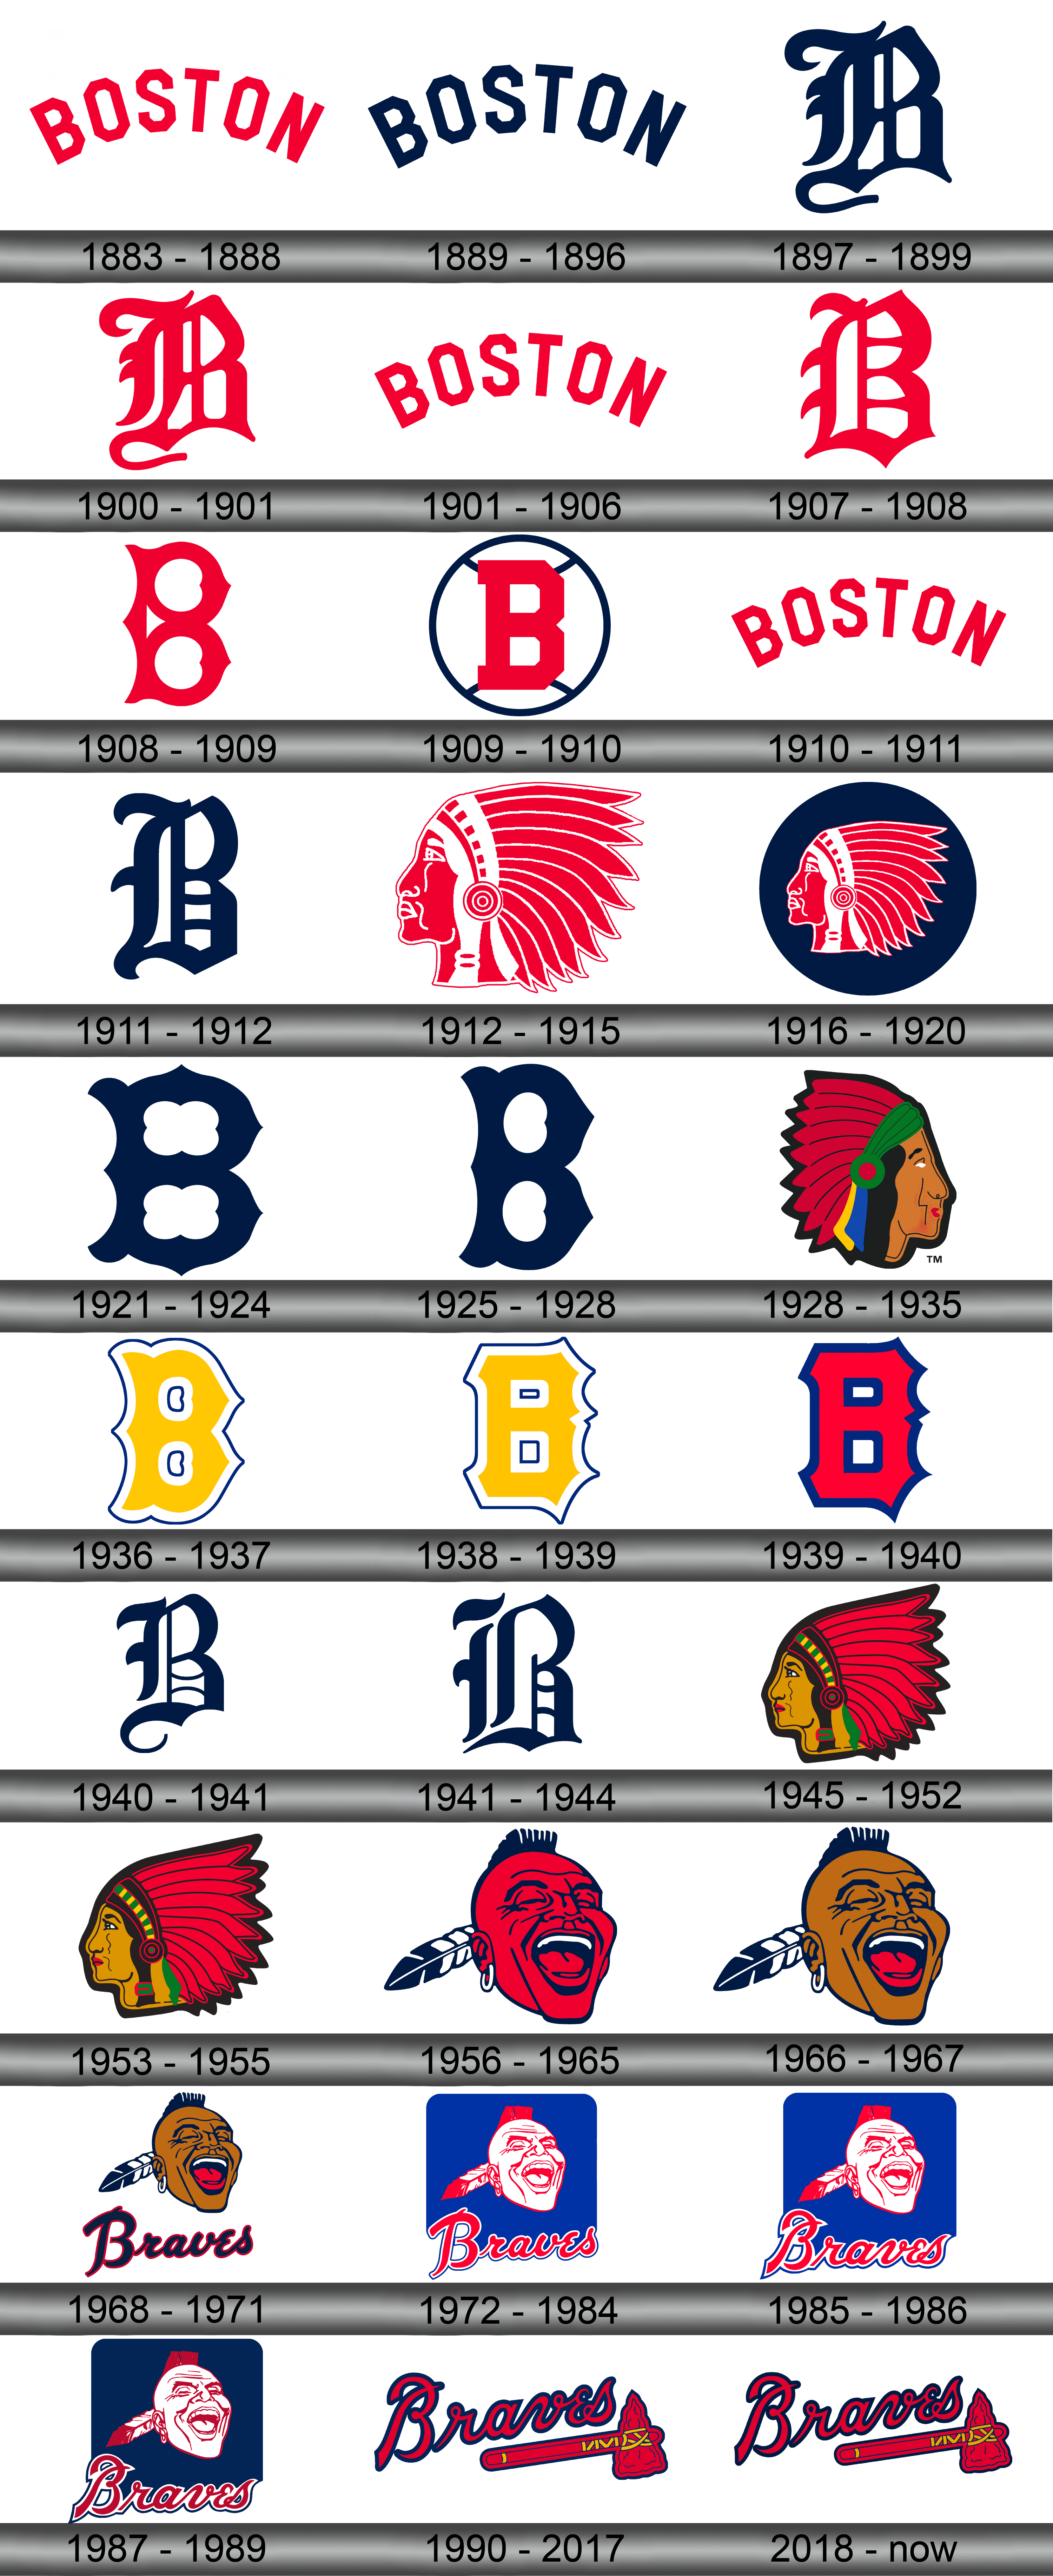 Atlanta Braves Logos - Atlanta Braves Logo PNG Transparent With